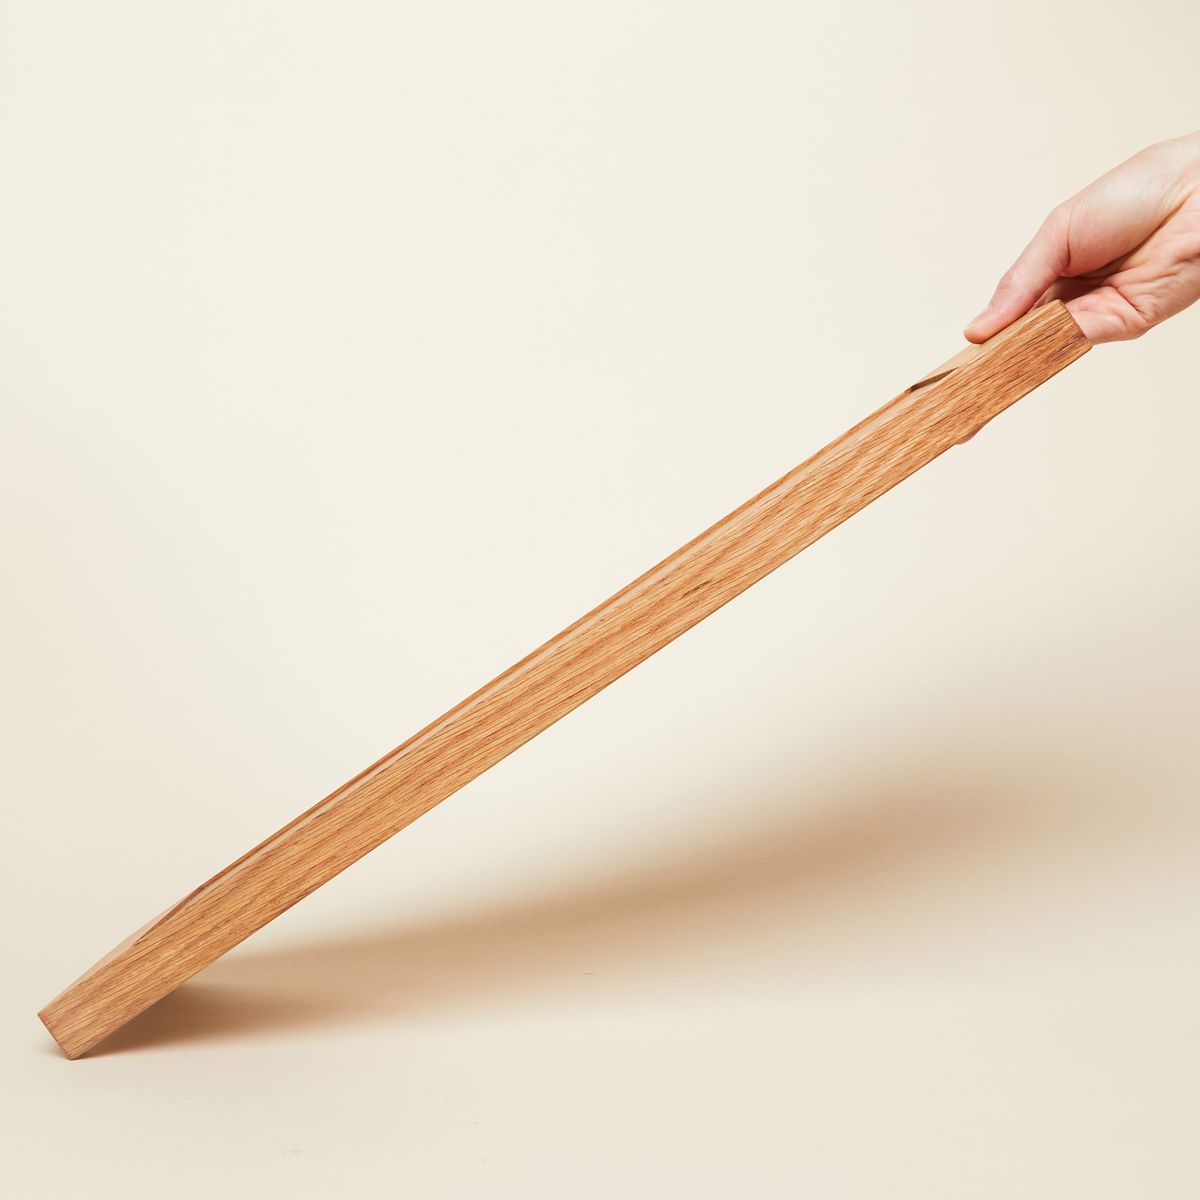 Edge of charcuterie board, emphasizing wood grain